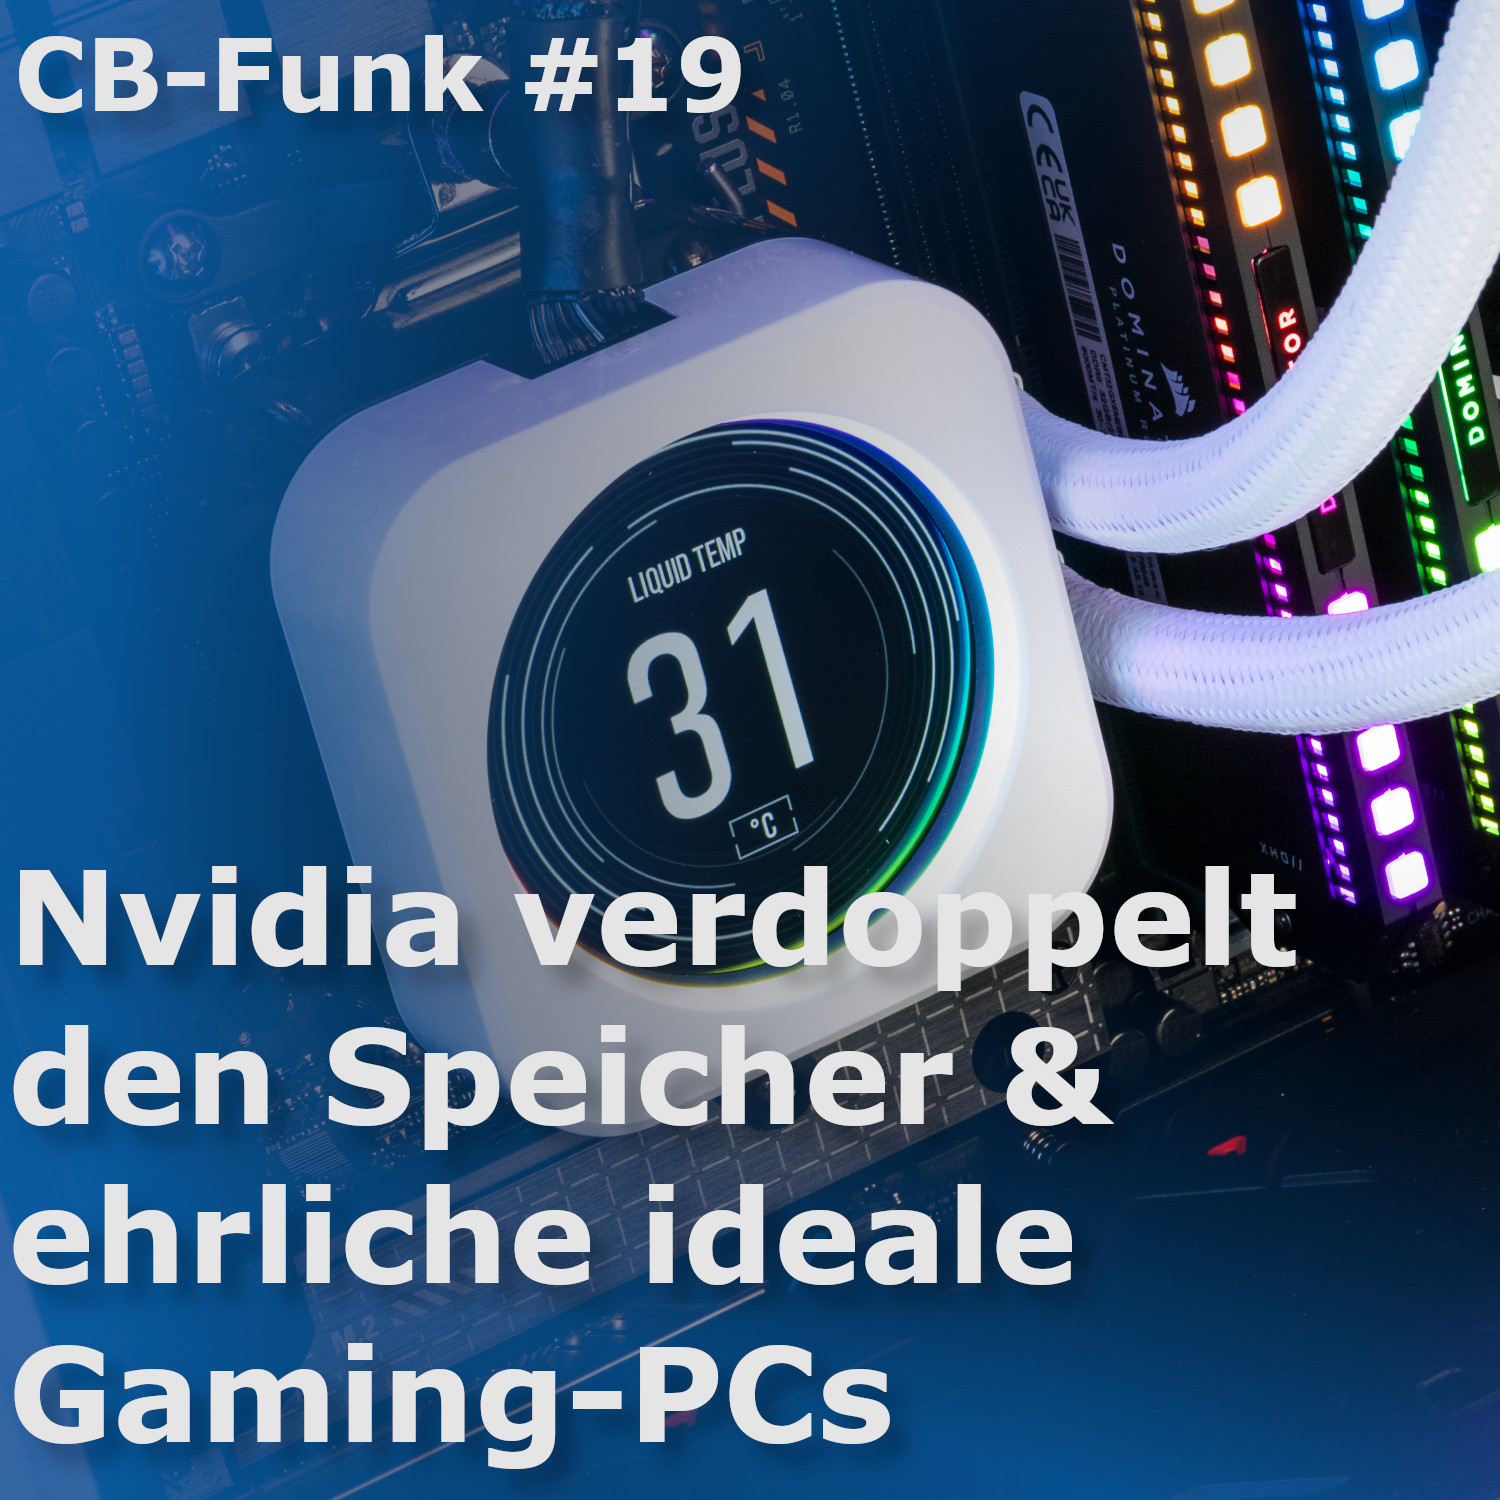 #19 Nvidia verdoppelt den Speicher & ehrliche ideale Gaming-PCs